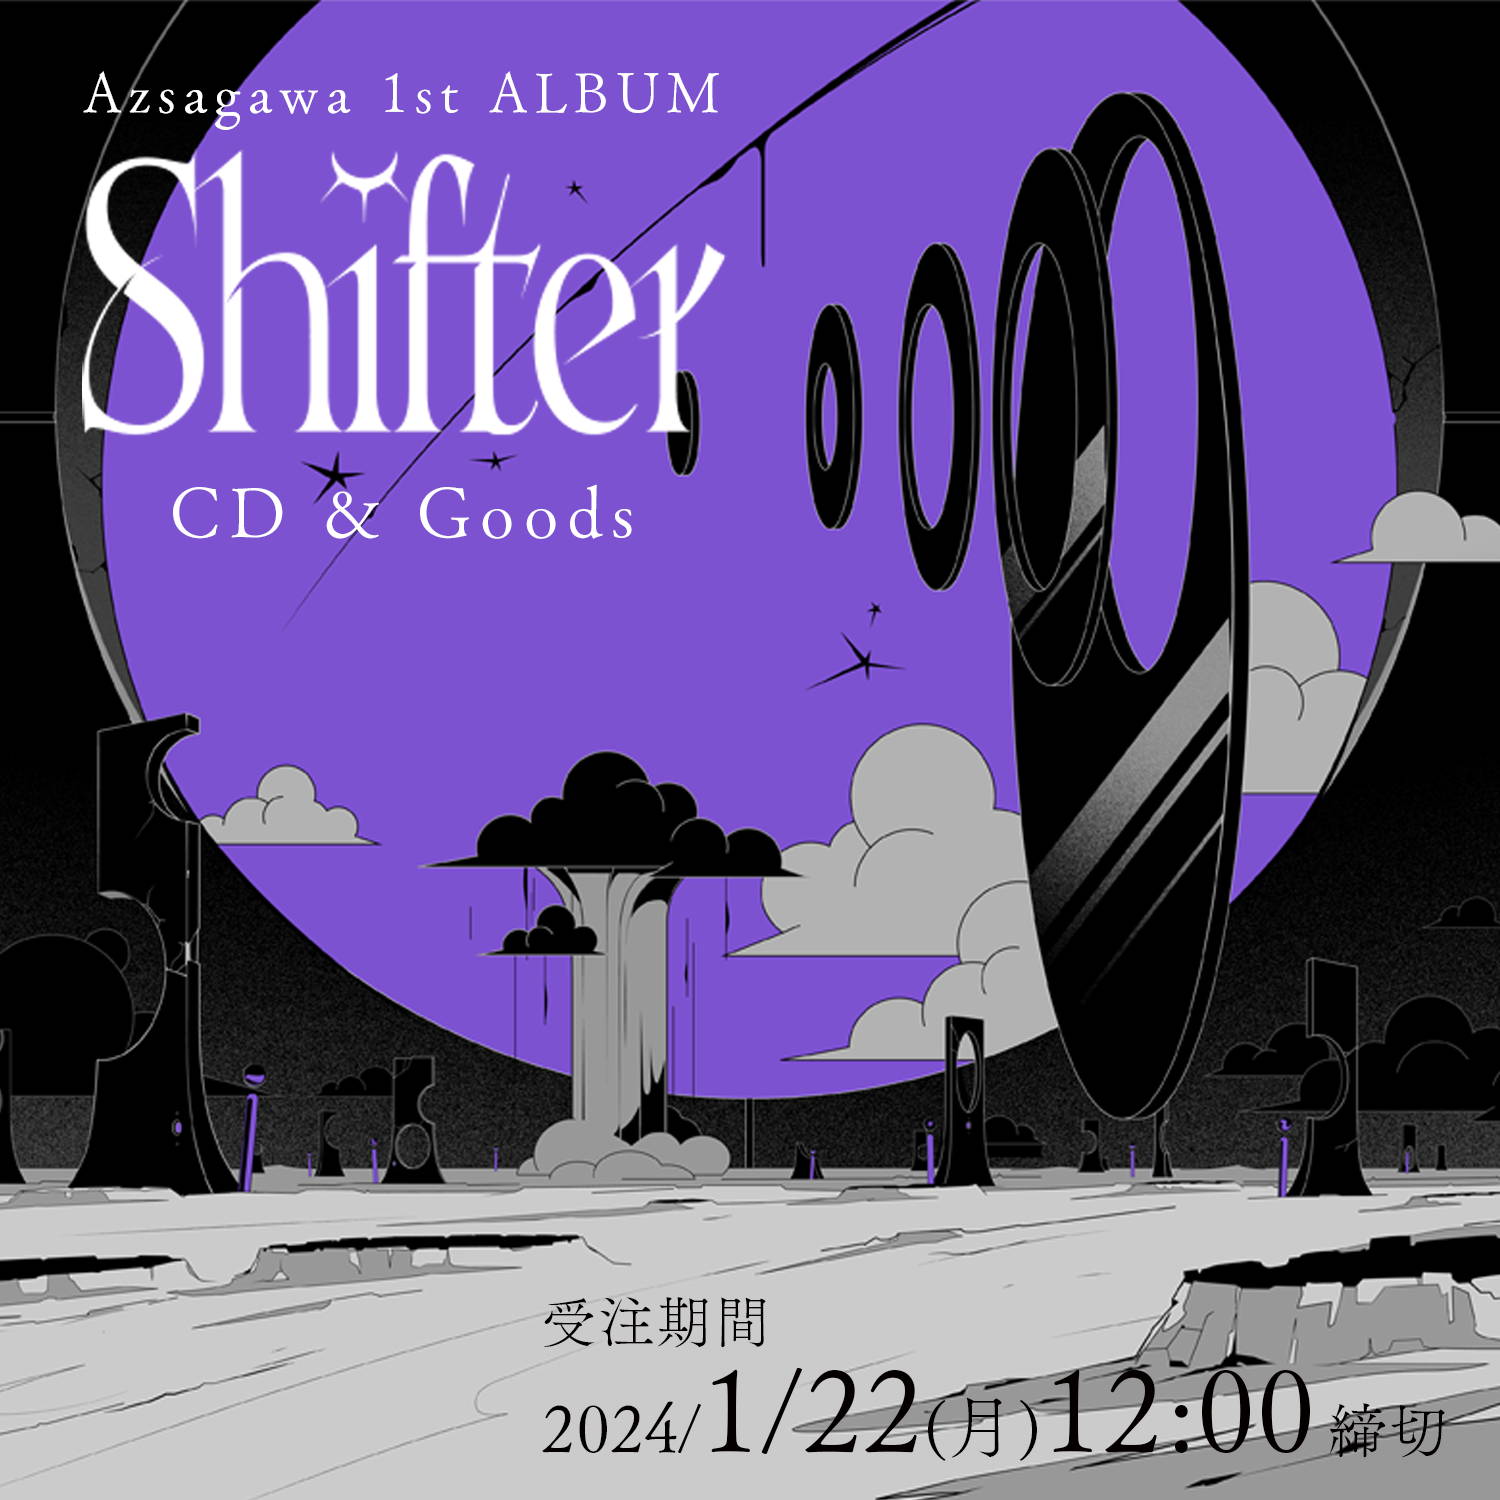 Azsagawa 1st ALBUM「Shifter」CD & Goods – FINDME STORE by THINKR